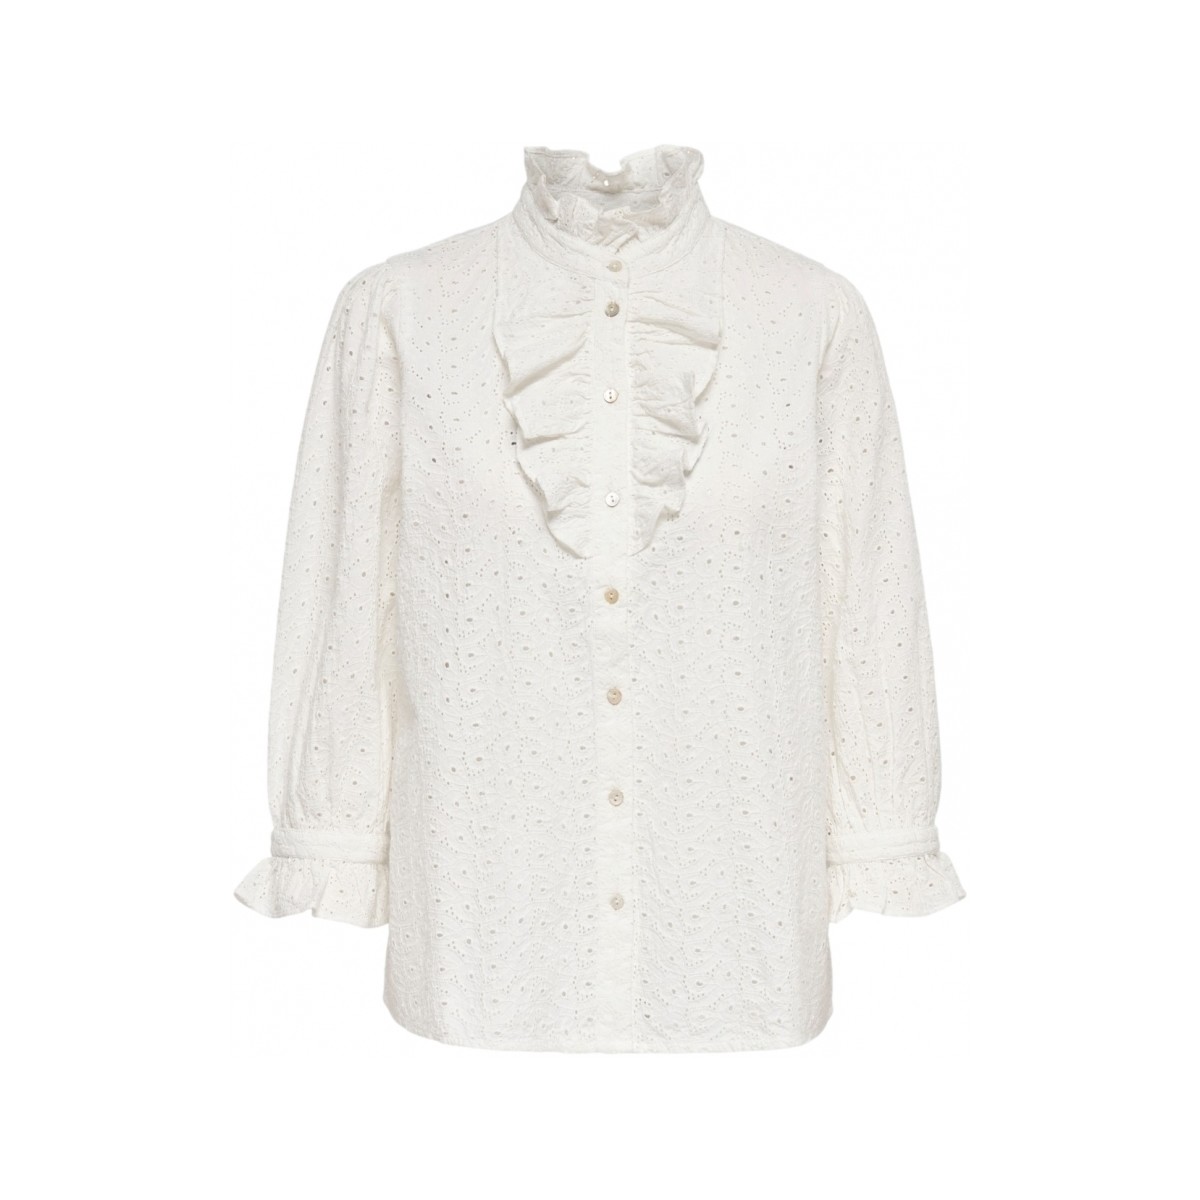 Textil Mulher Tops / Blusas La Strada Camisa Neela Broderie - Star White Branco